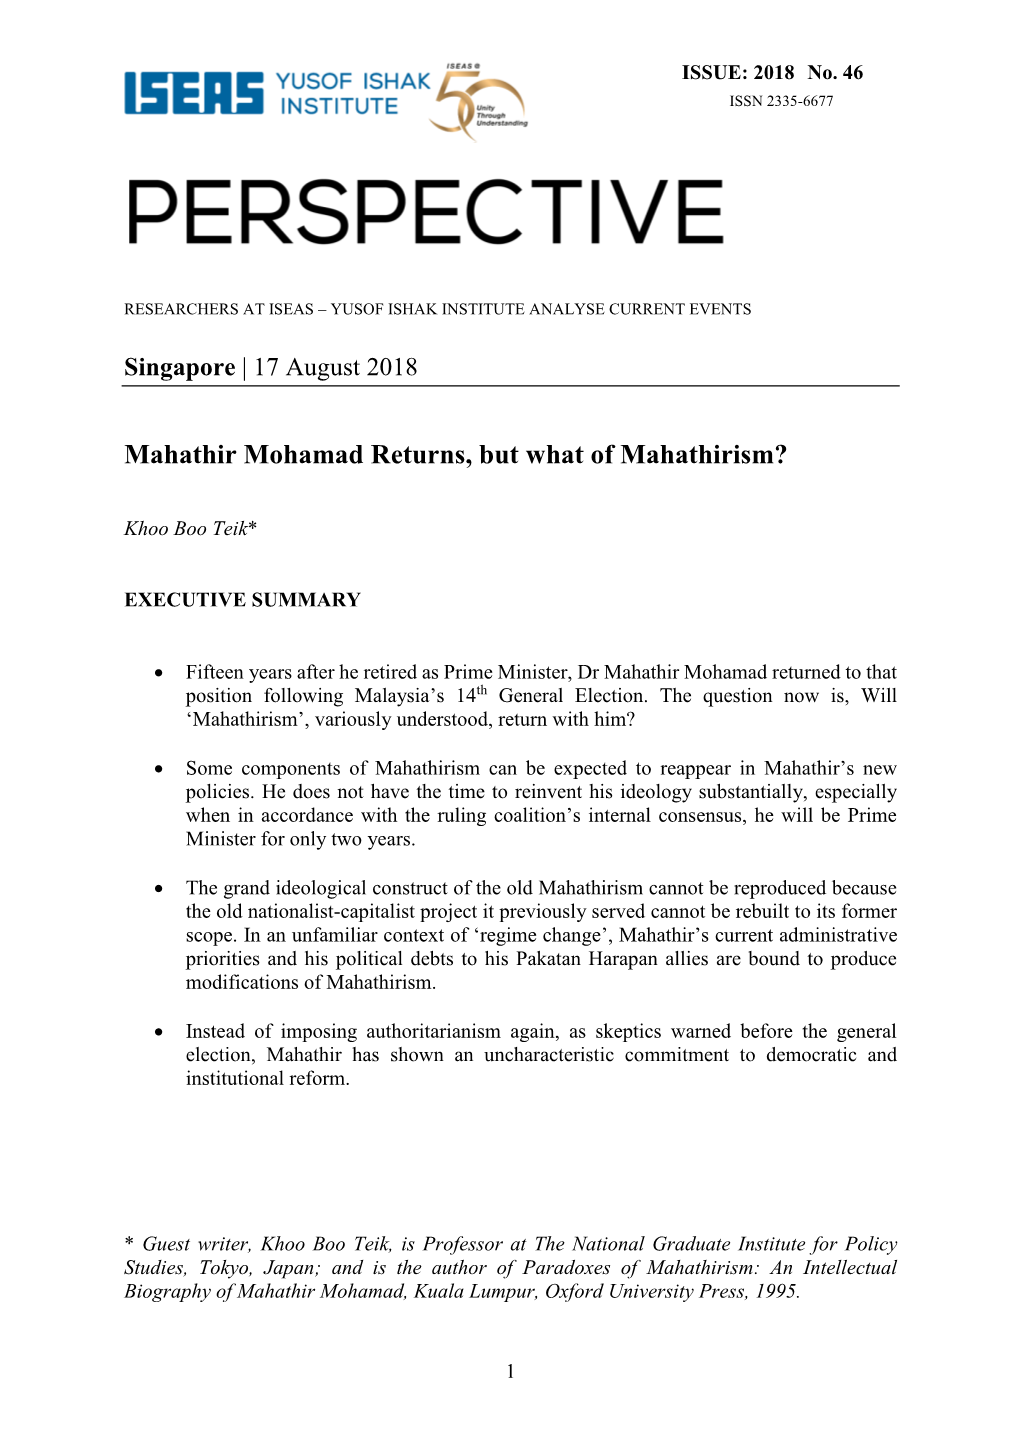 Mahathir Mohamad Returns, but What of Mahathirism?